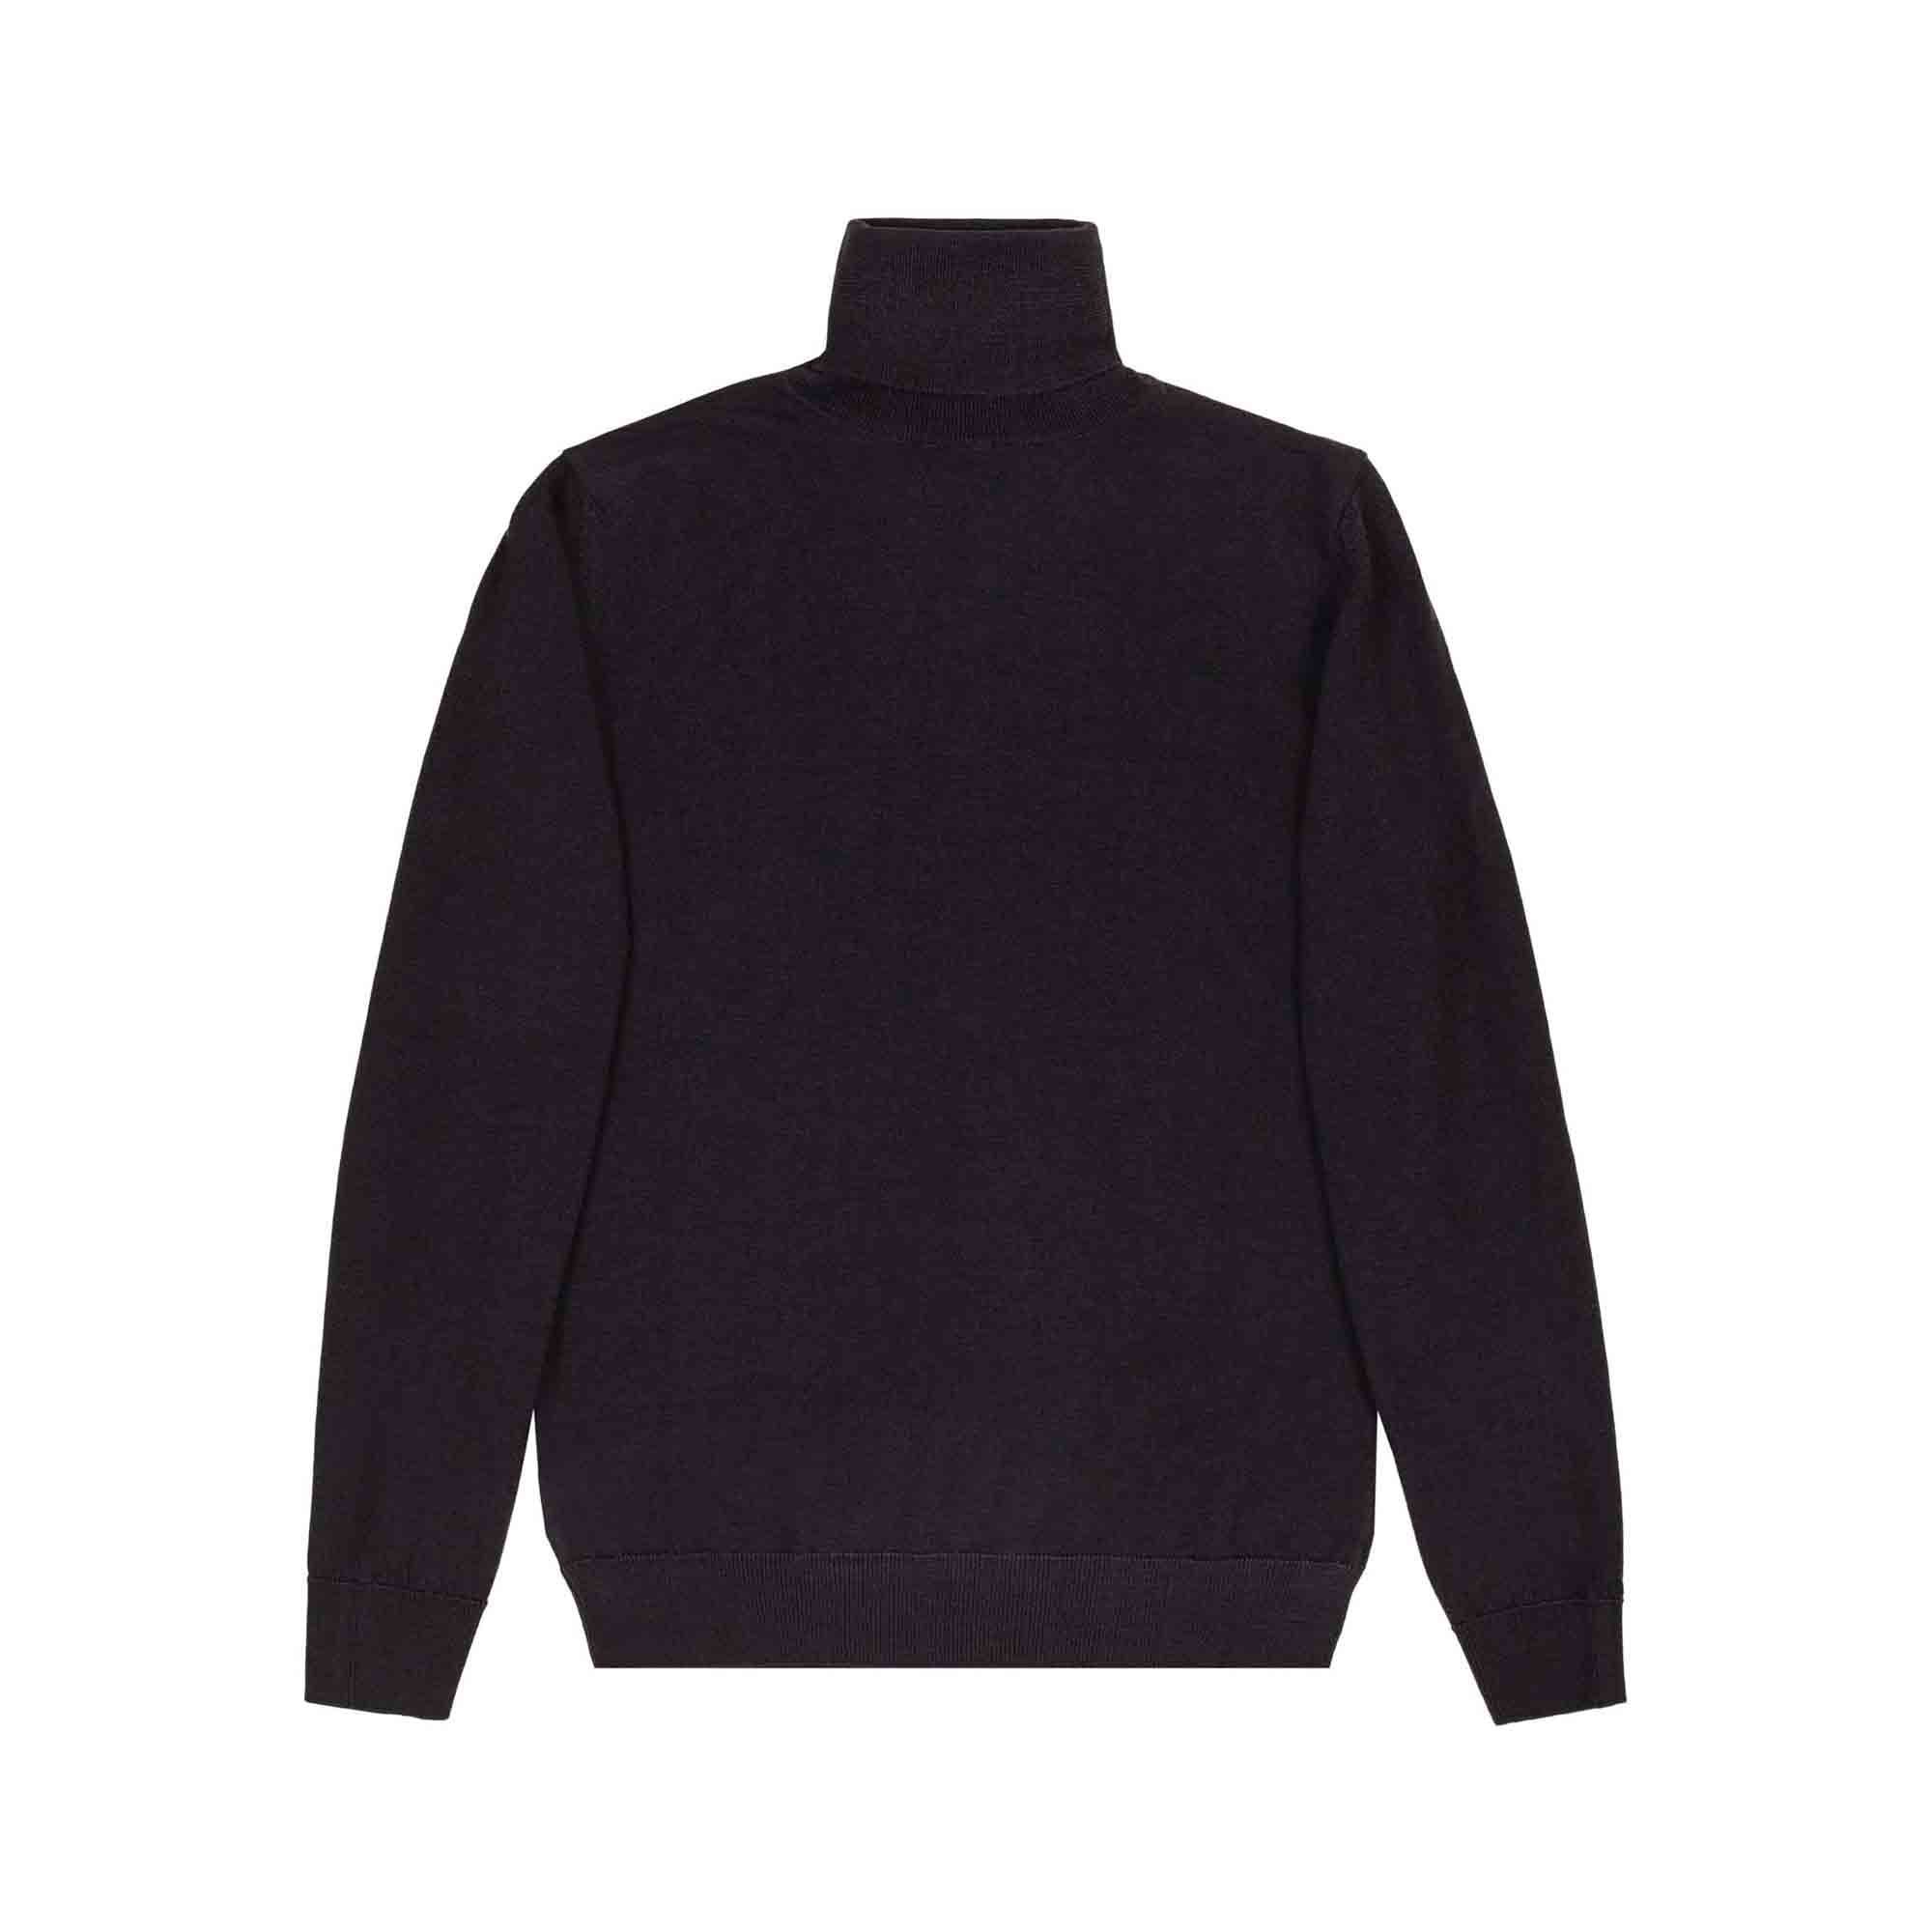 Charcoal Gray Wool Turtleneck Sweater